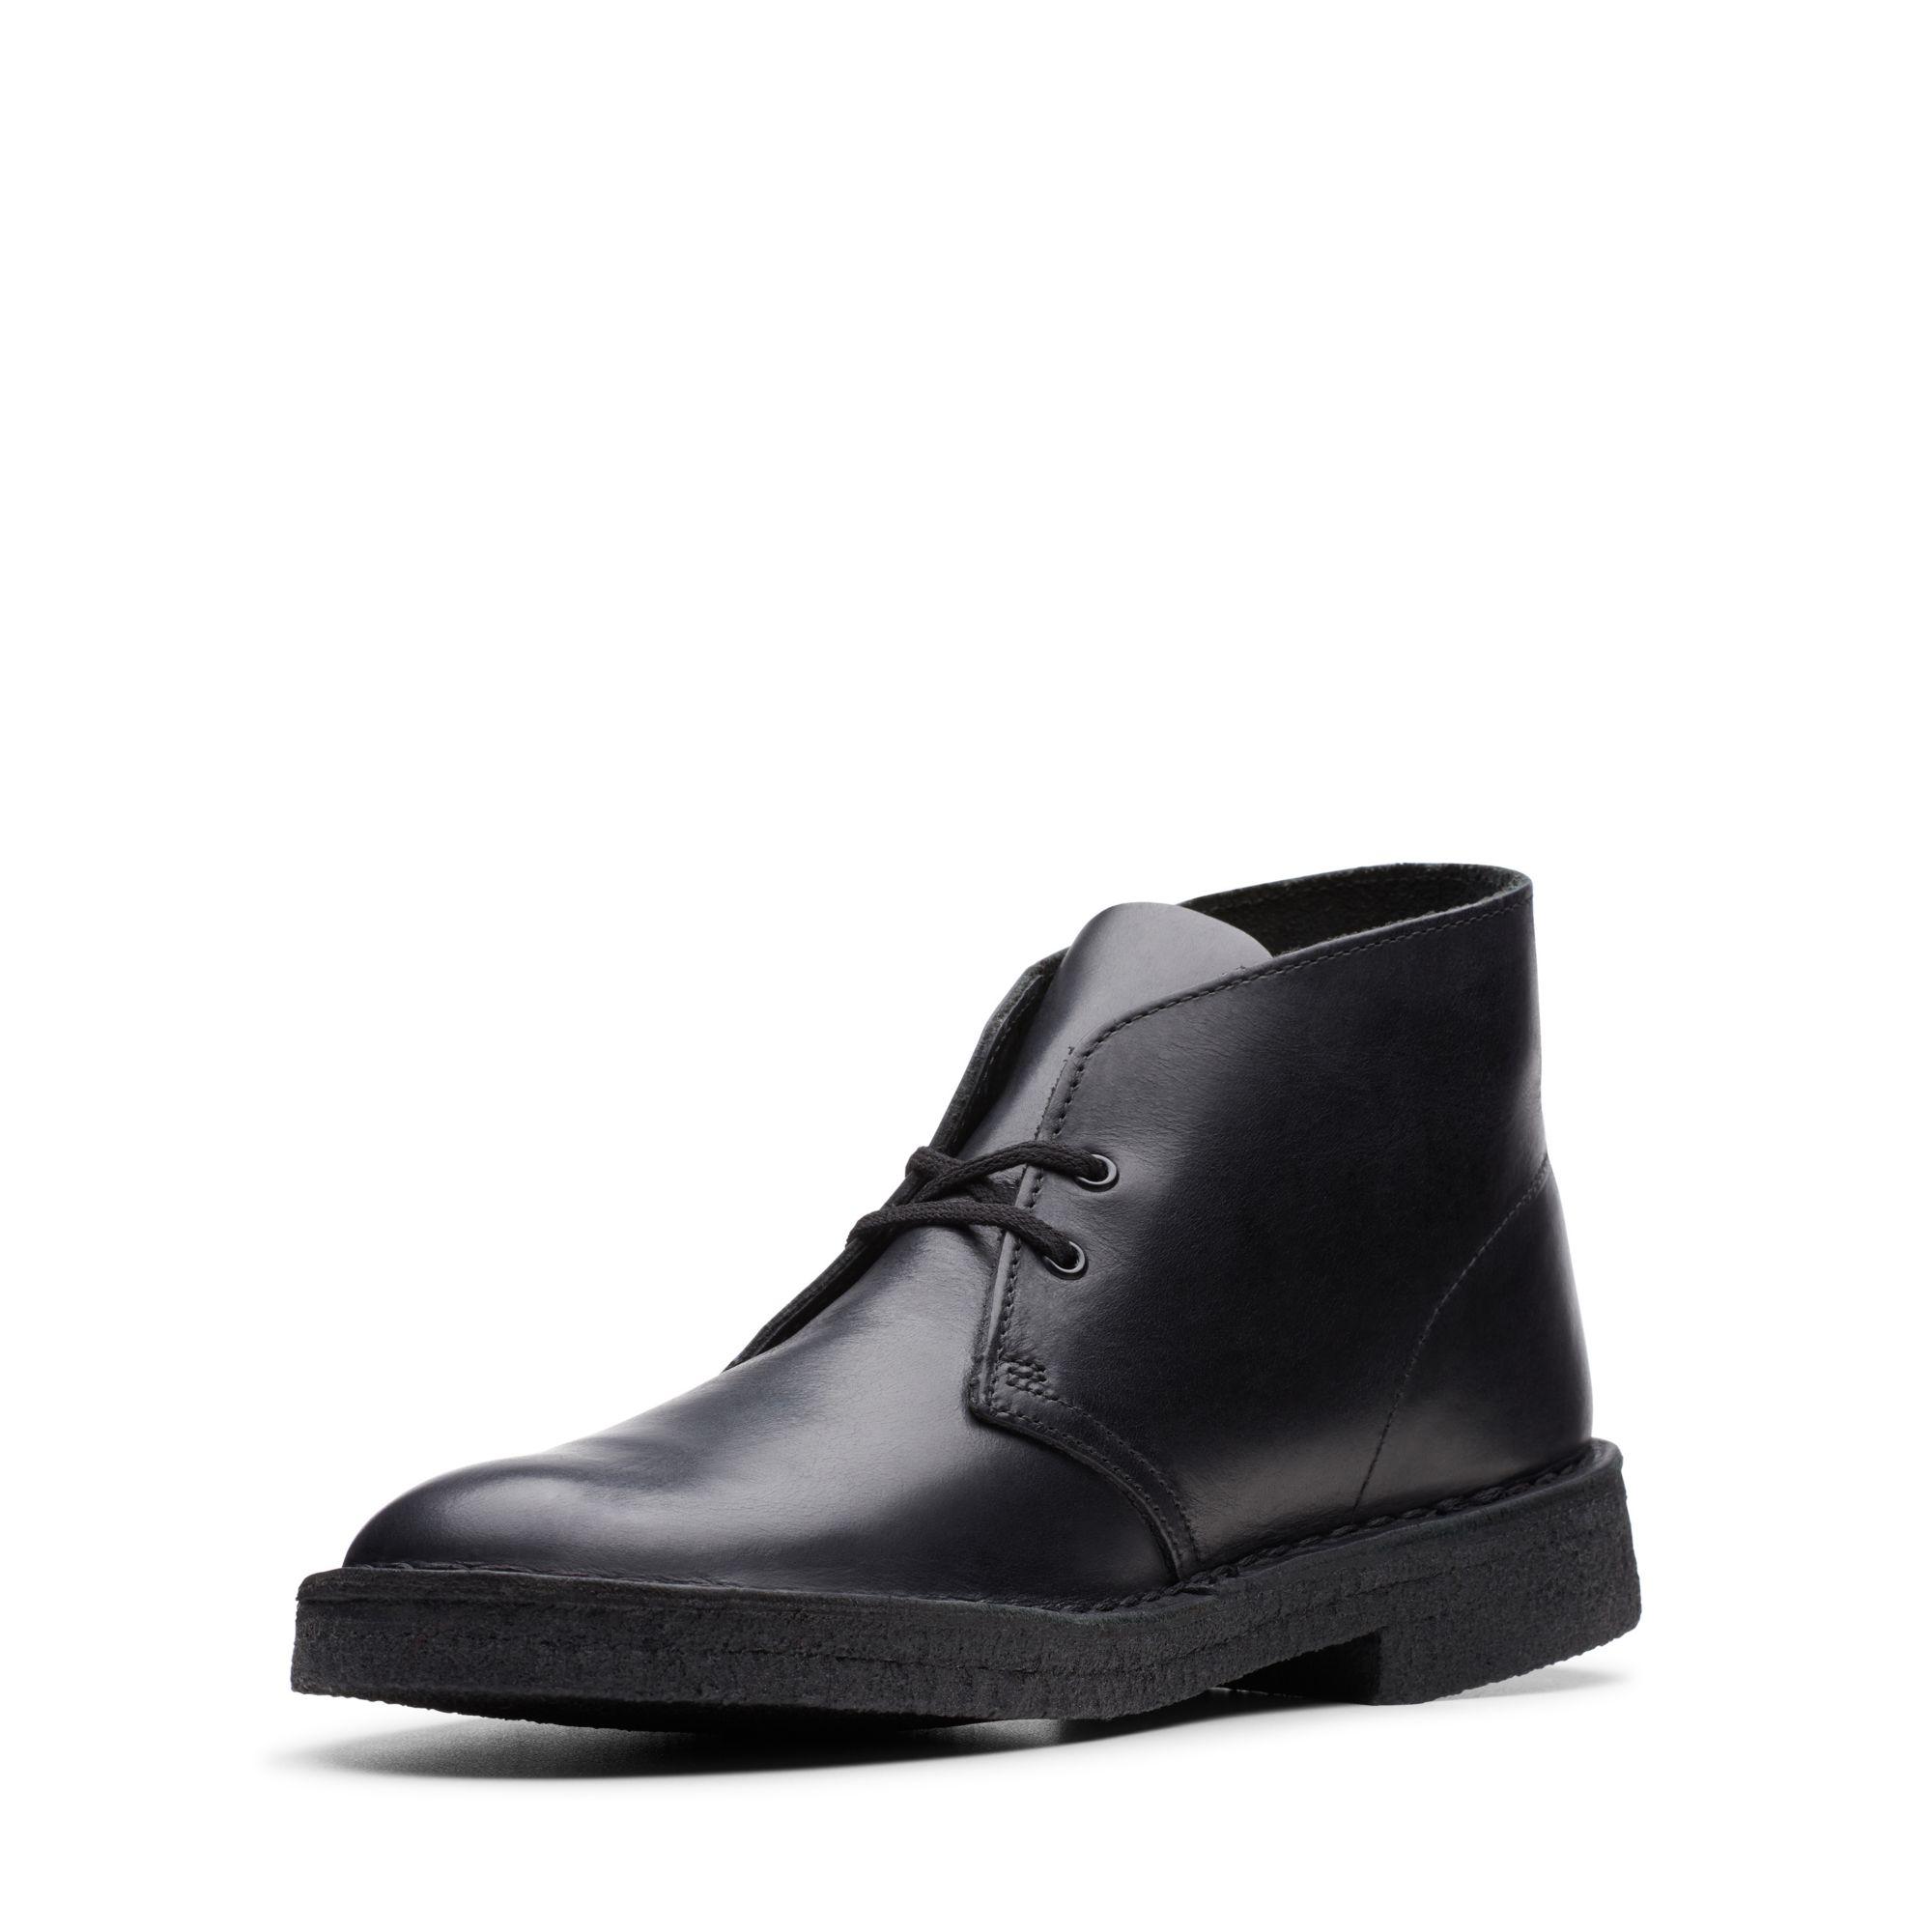 Clarks Leather Desert Boot in Black Polished (Black) for Men - Lyst